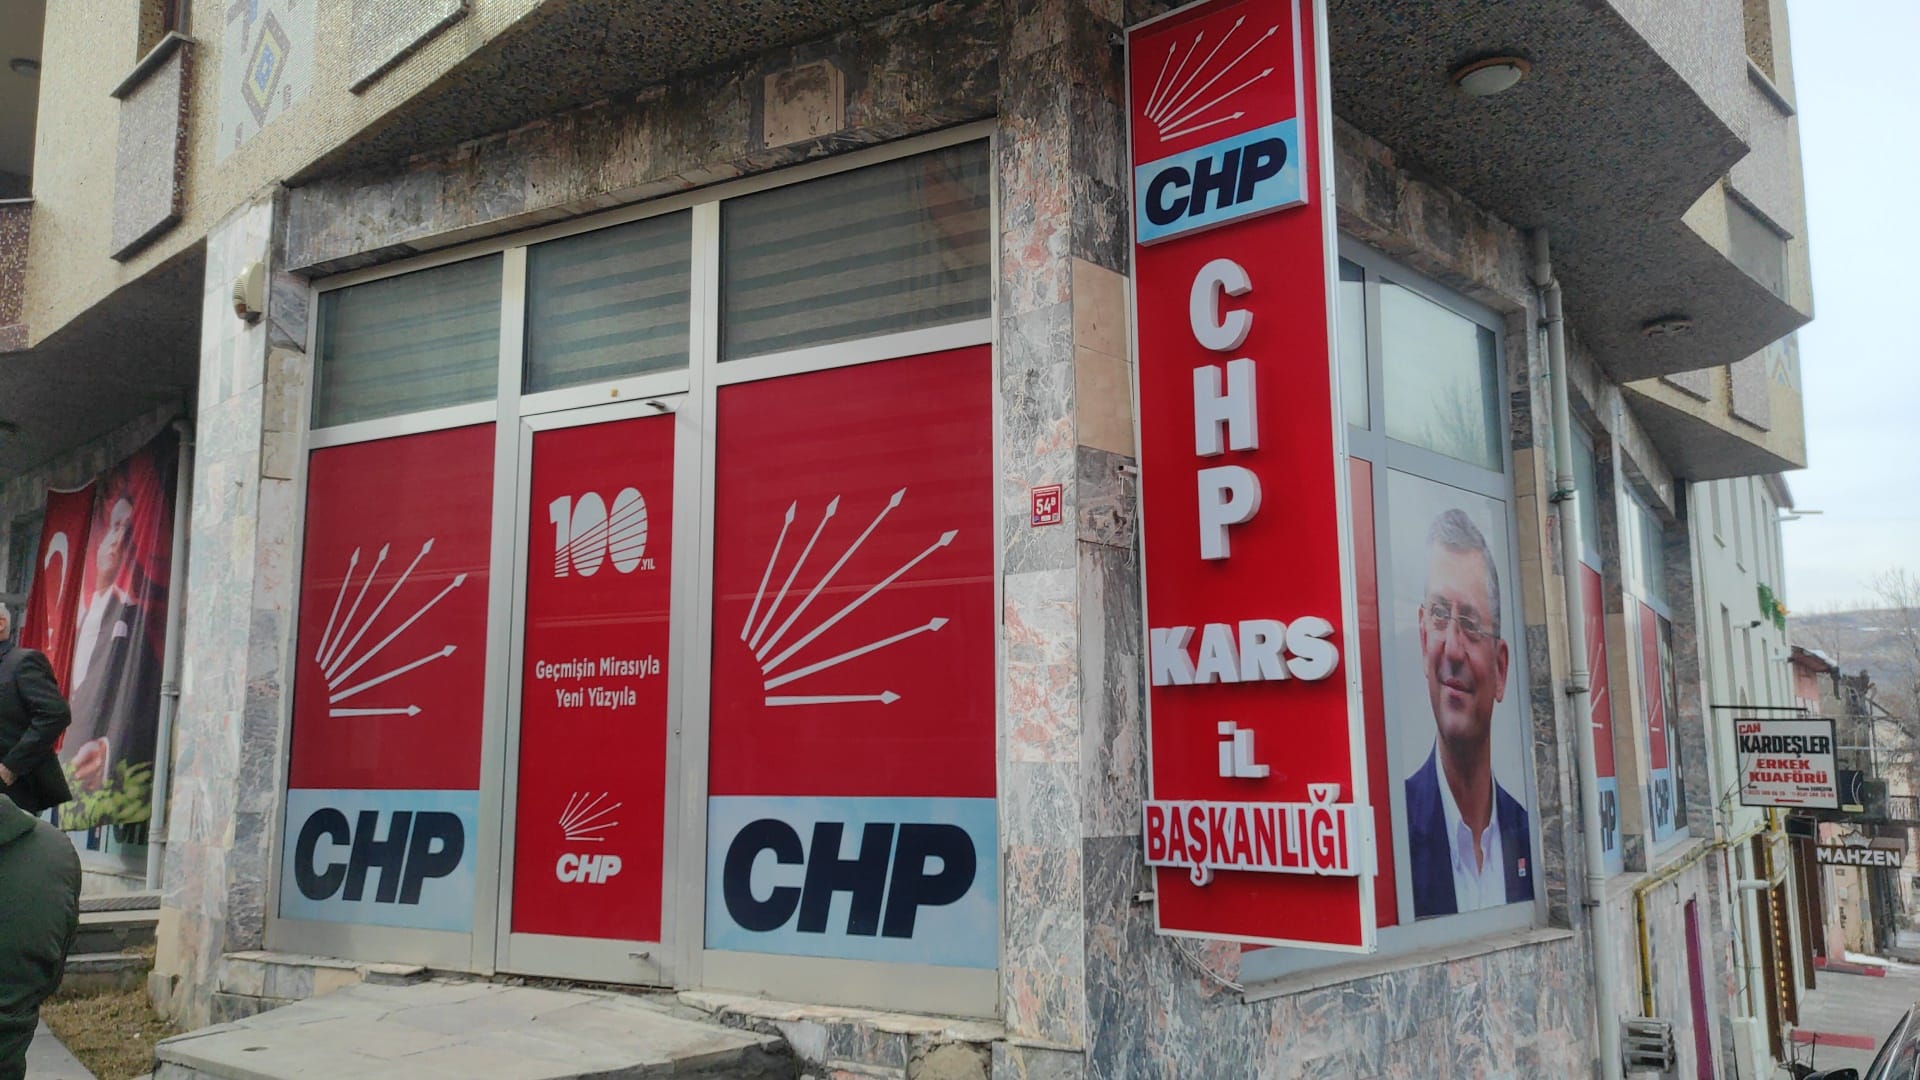 Kars'ta partililer CHP yönetimine tepki gösterdi